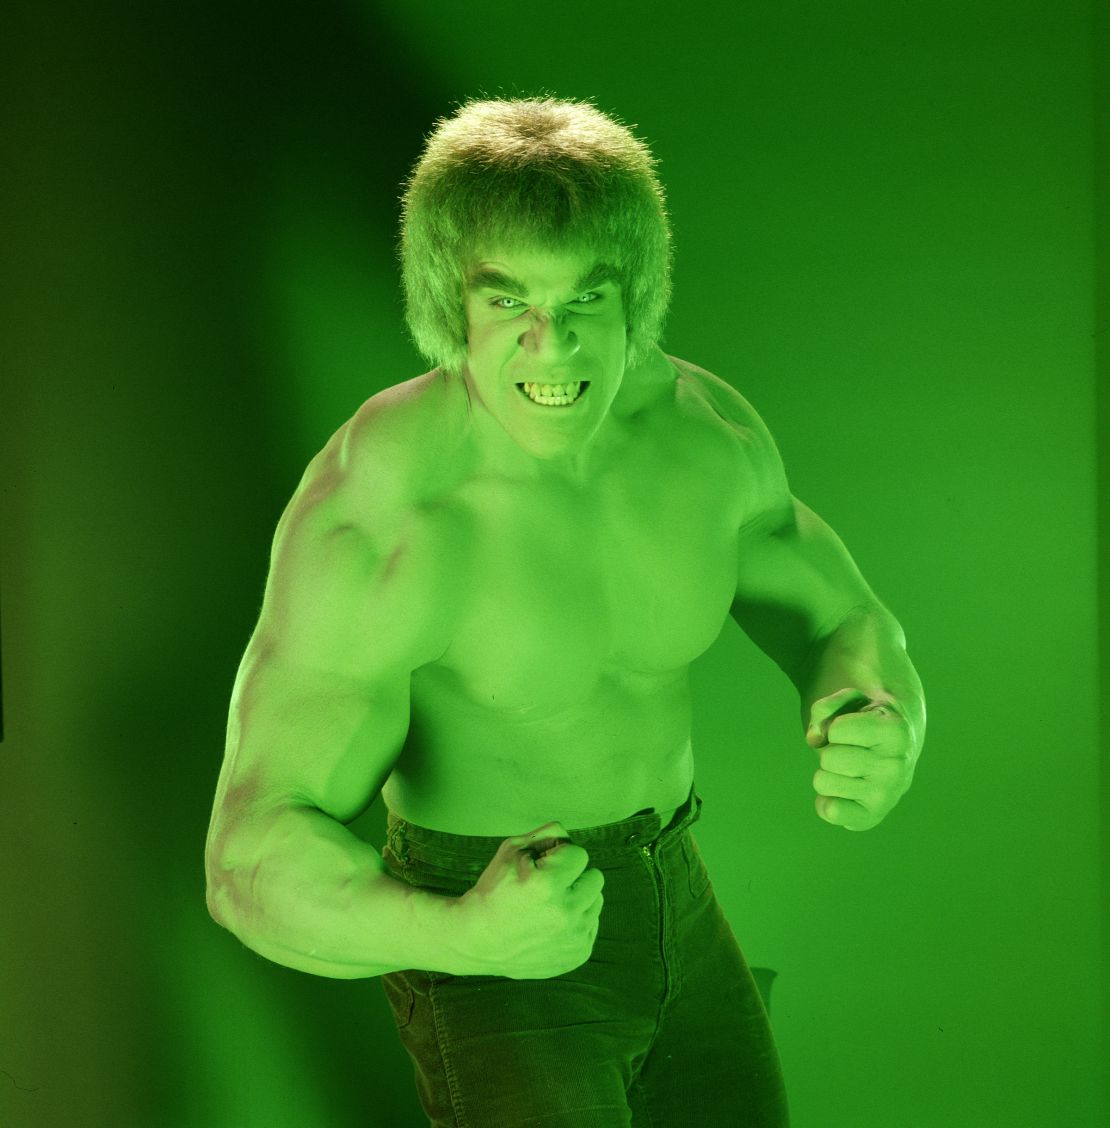 Lou Ferrigno as "The Incredible Hulk."